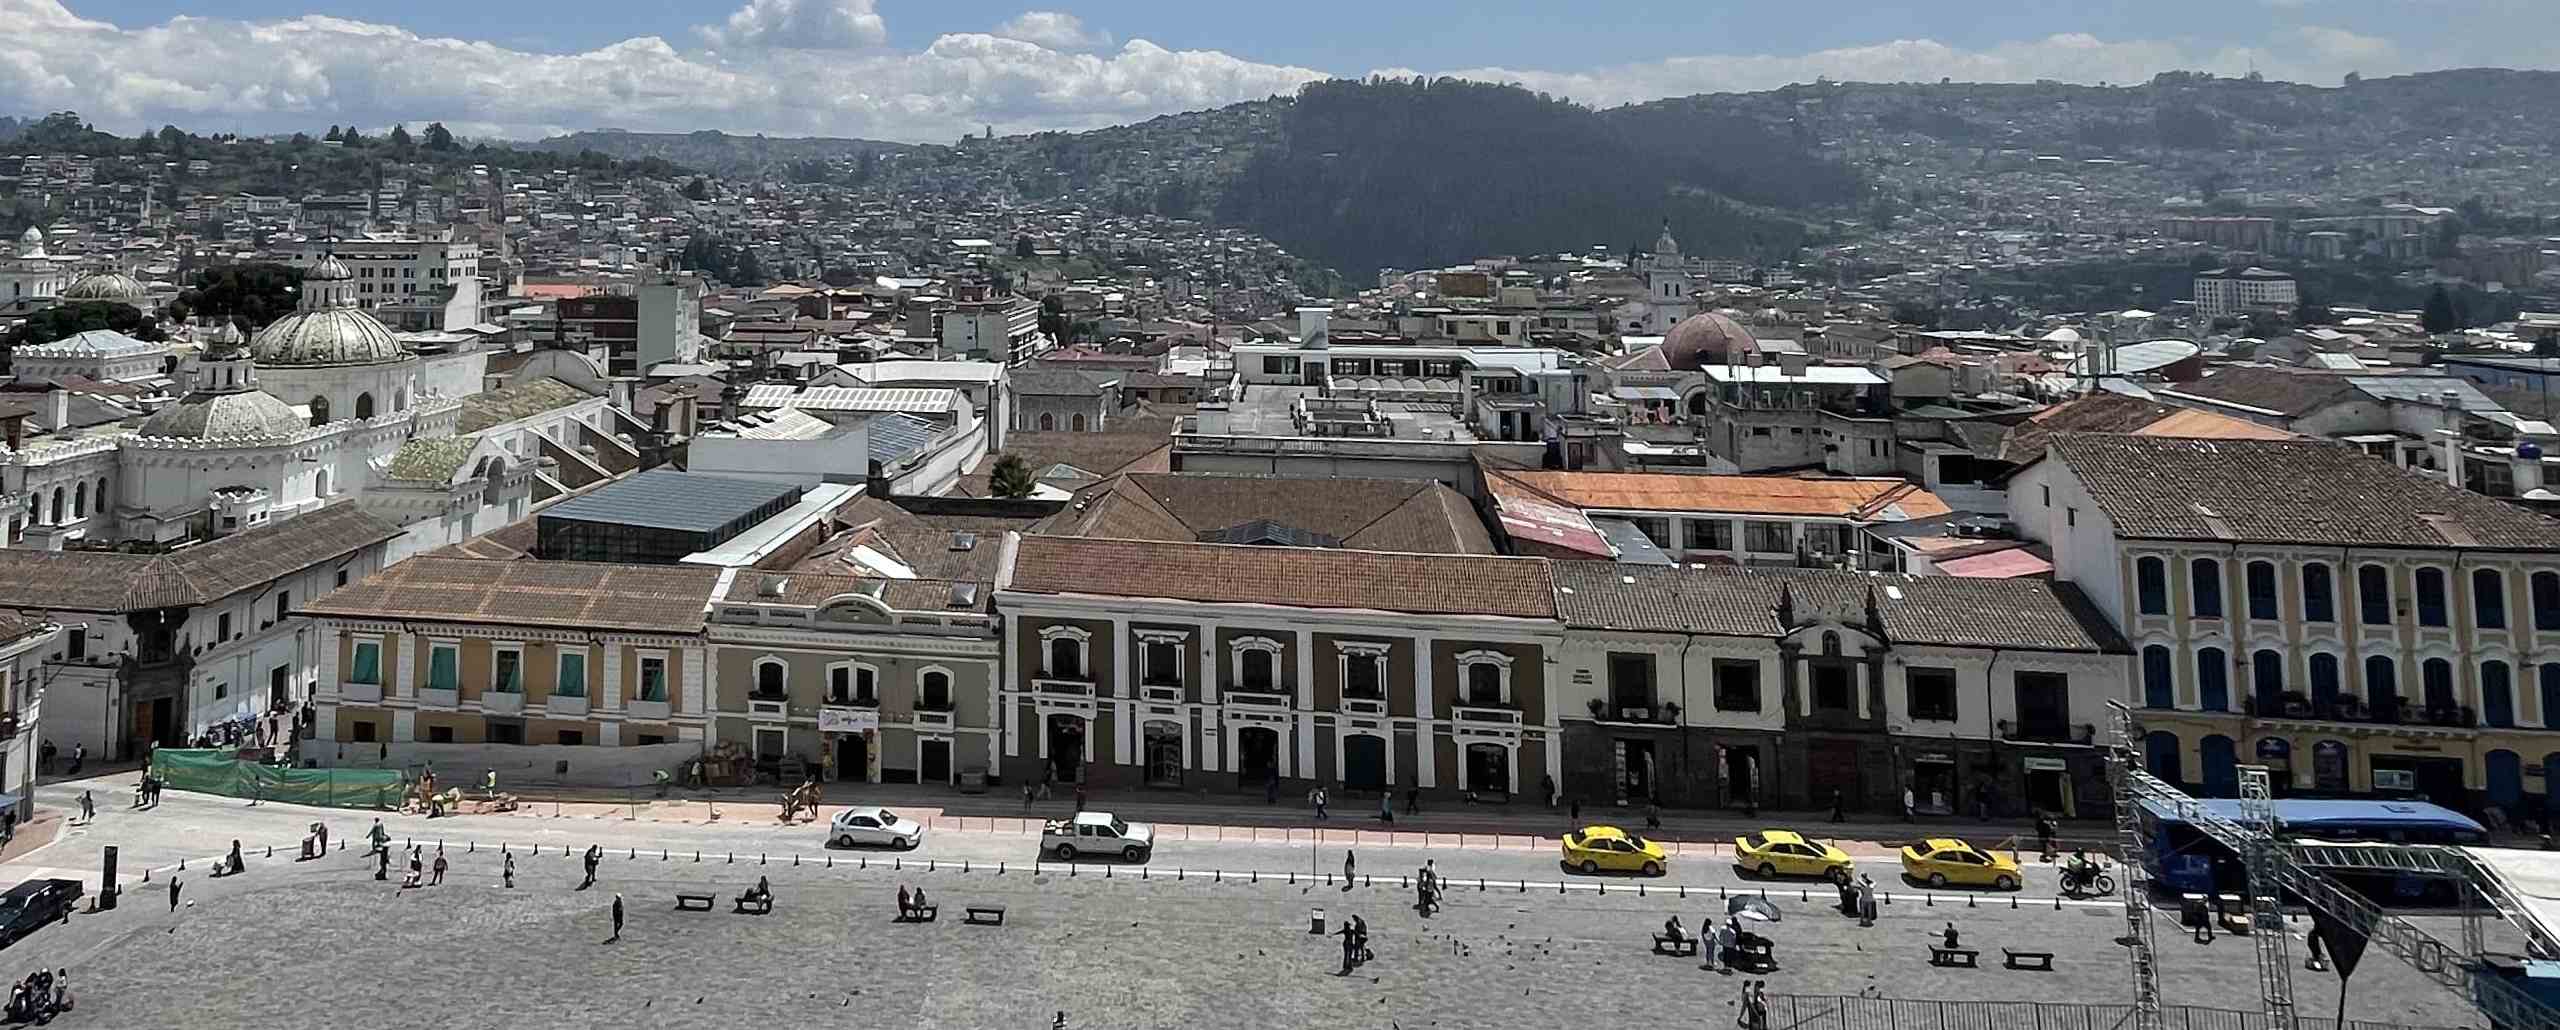 Five reasons you should linger longer on Ecuador’s mainland